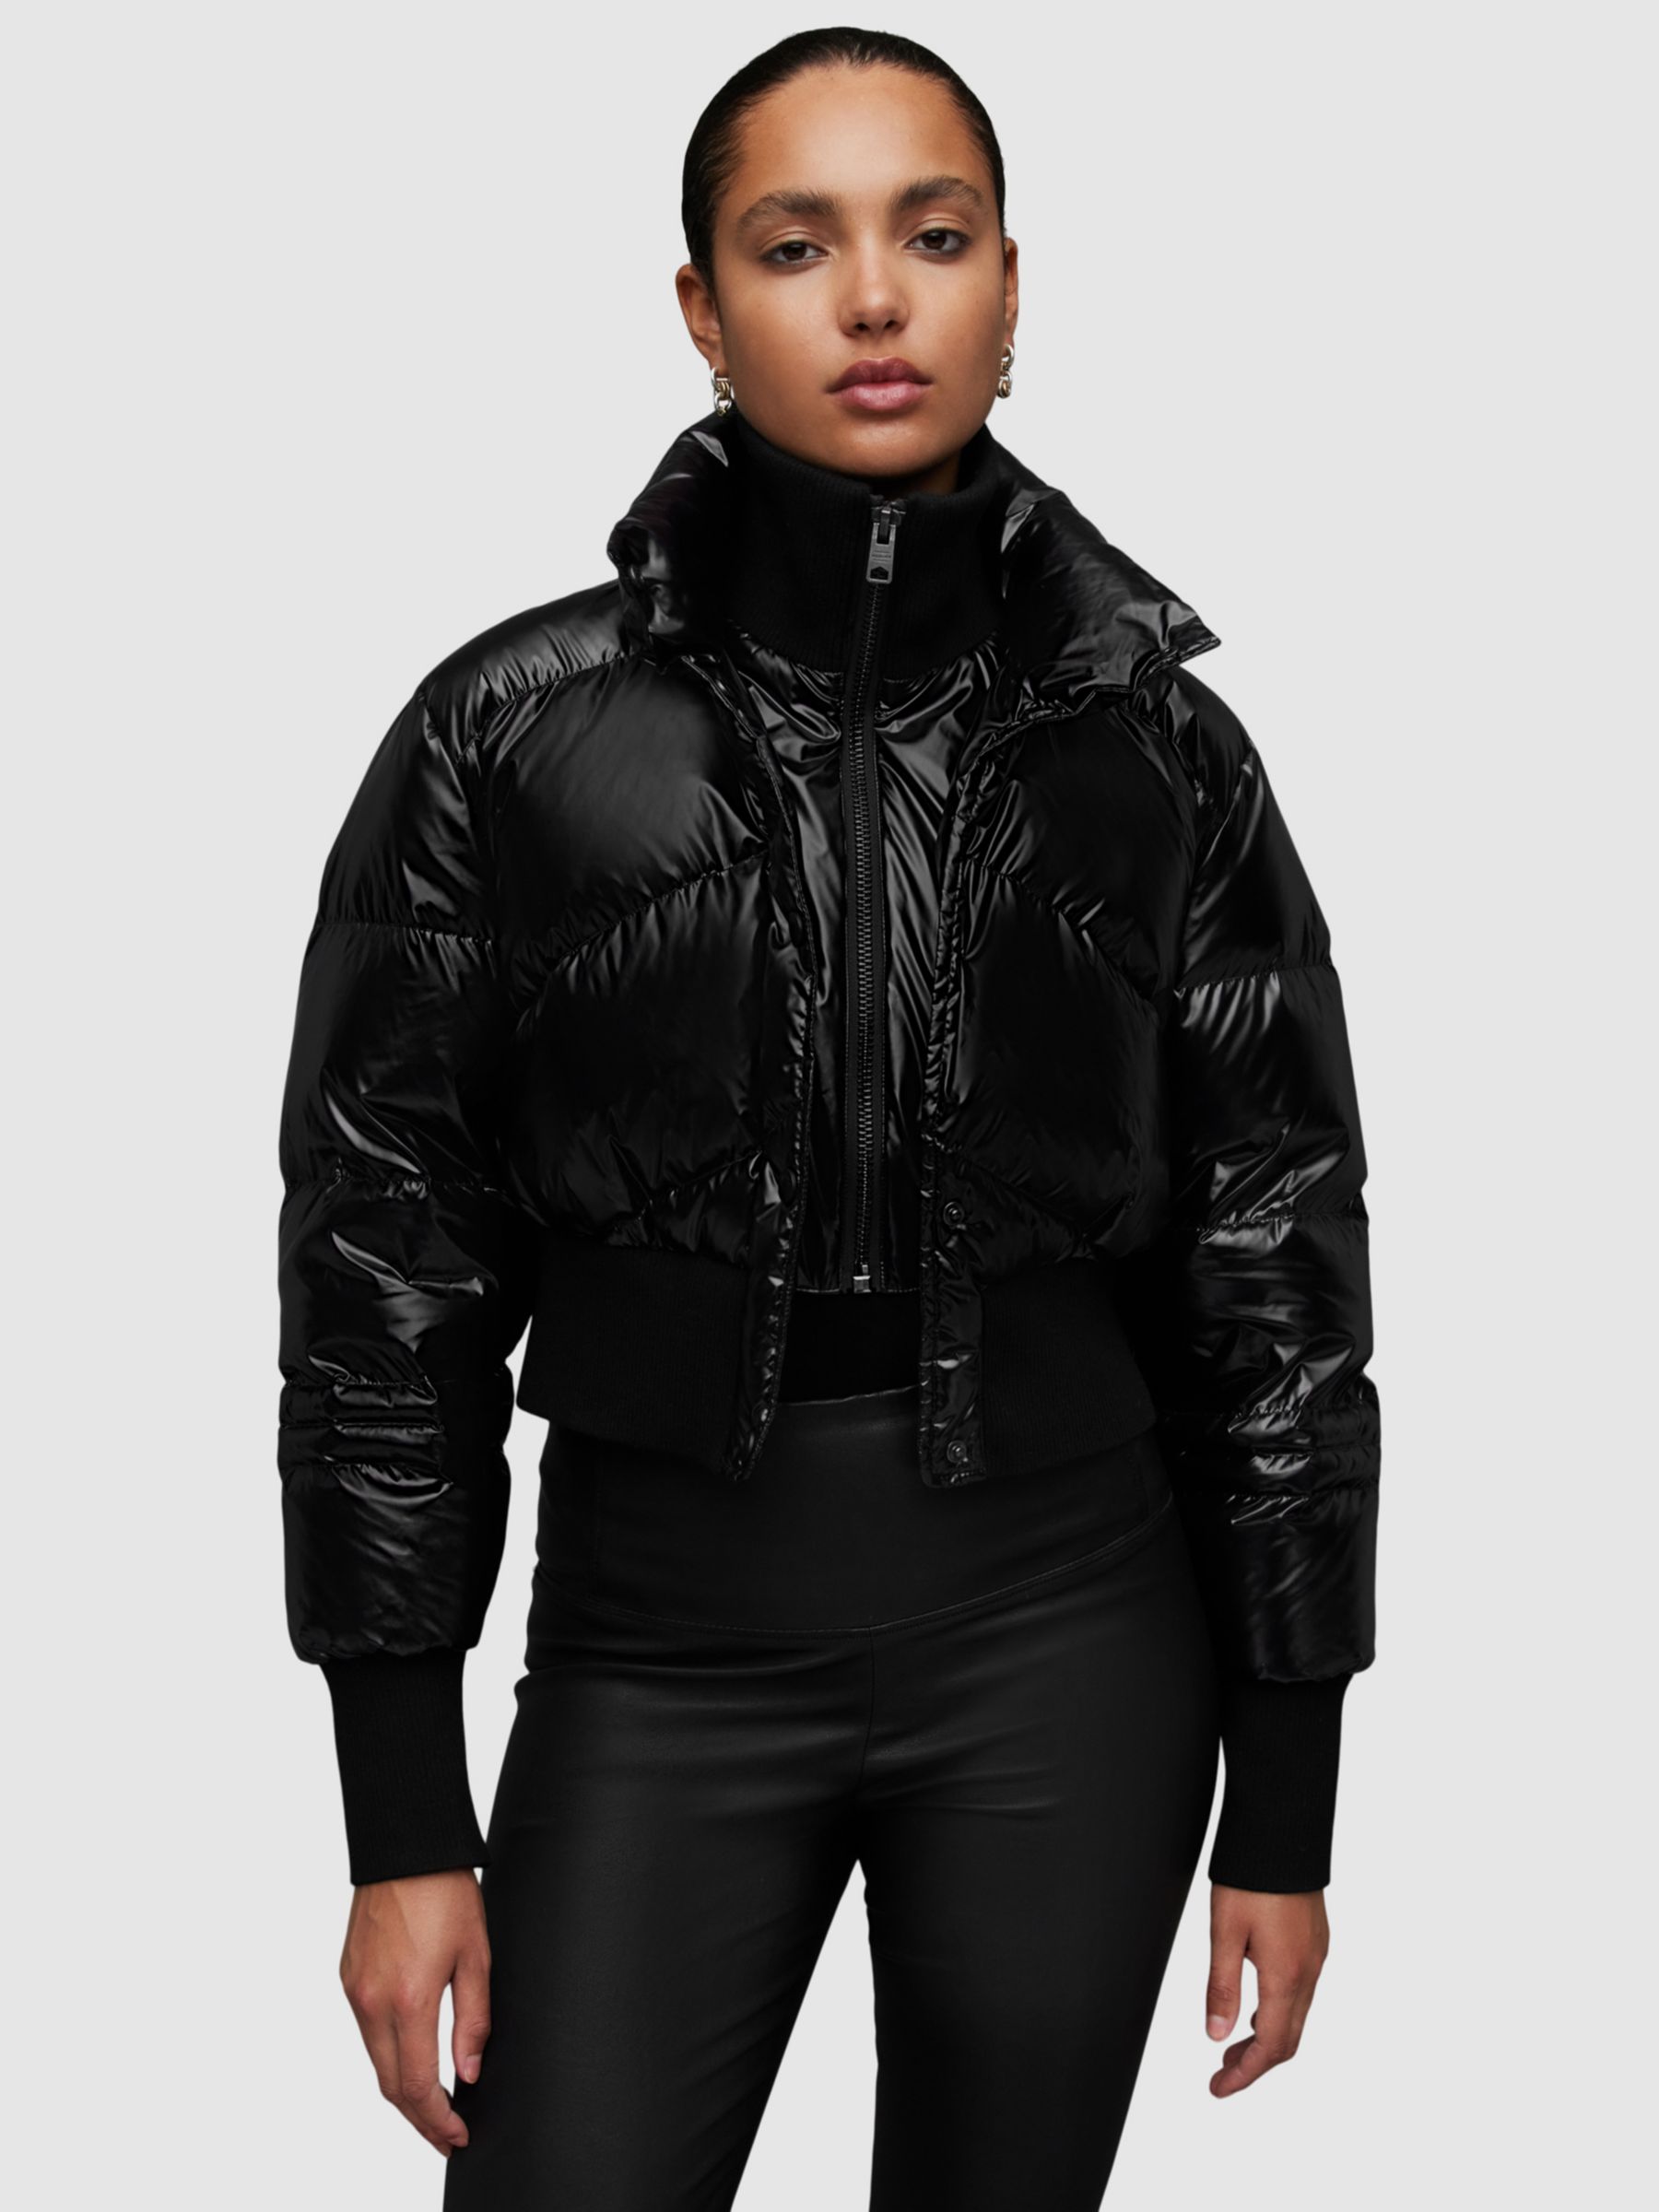 Black Shiny Puffer Jacket Cropped | vlr.eng.br